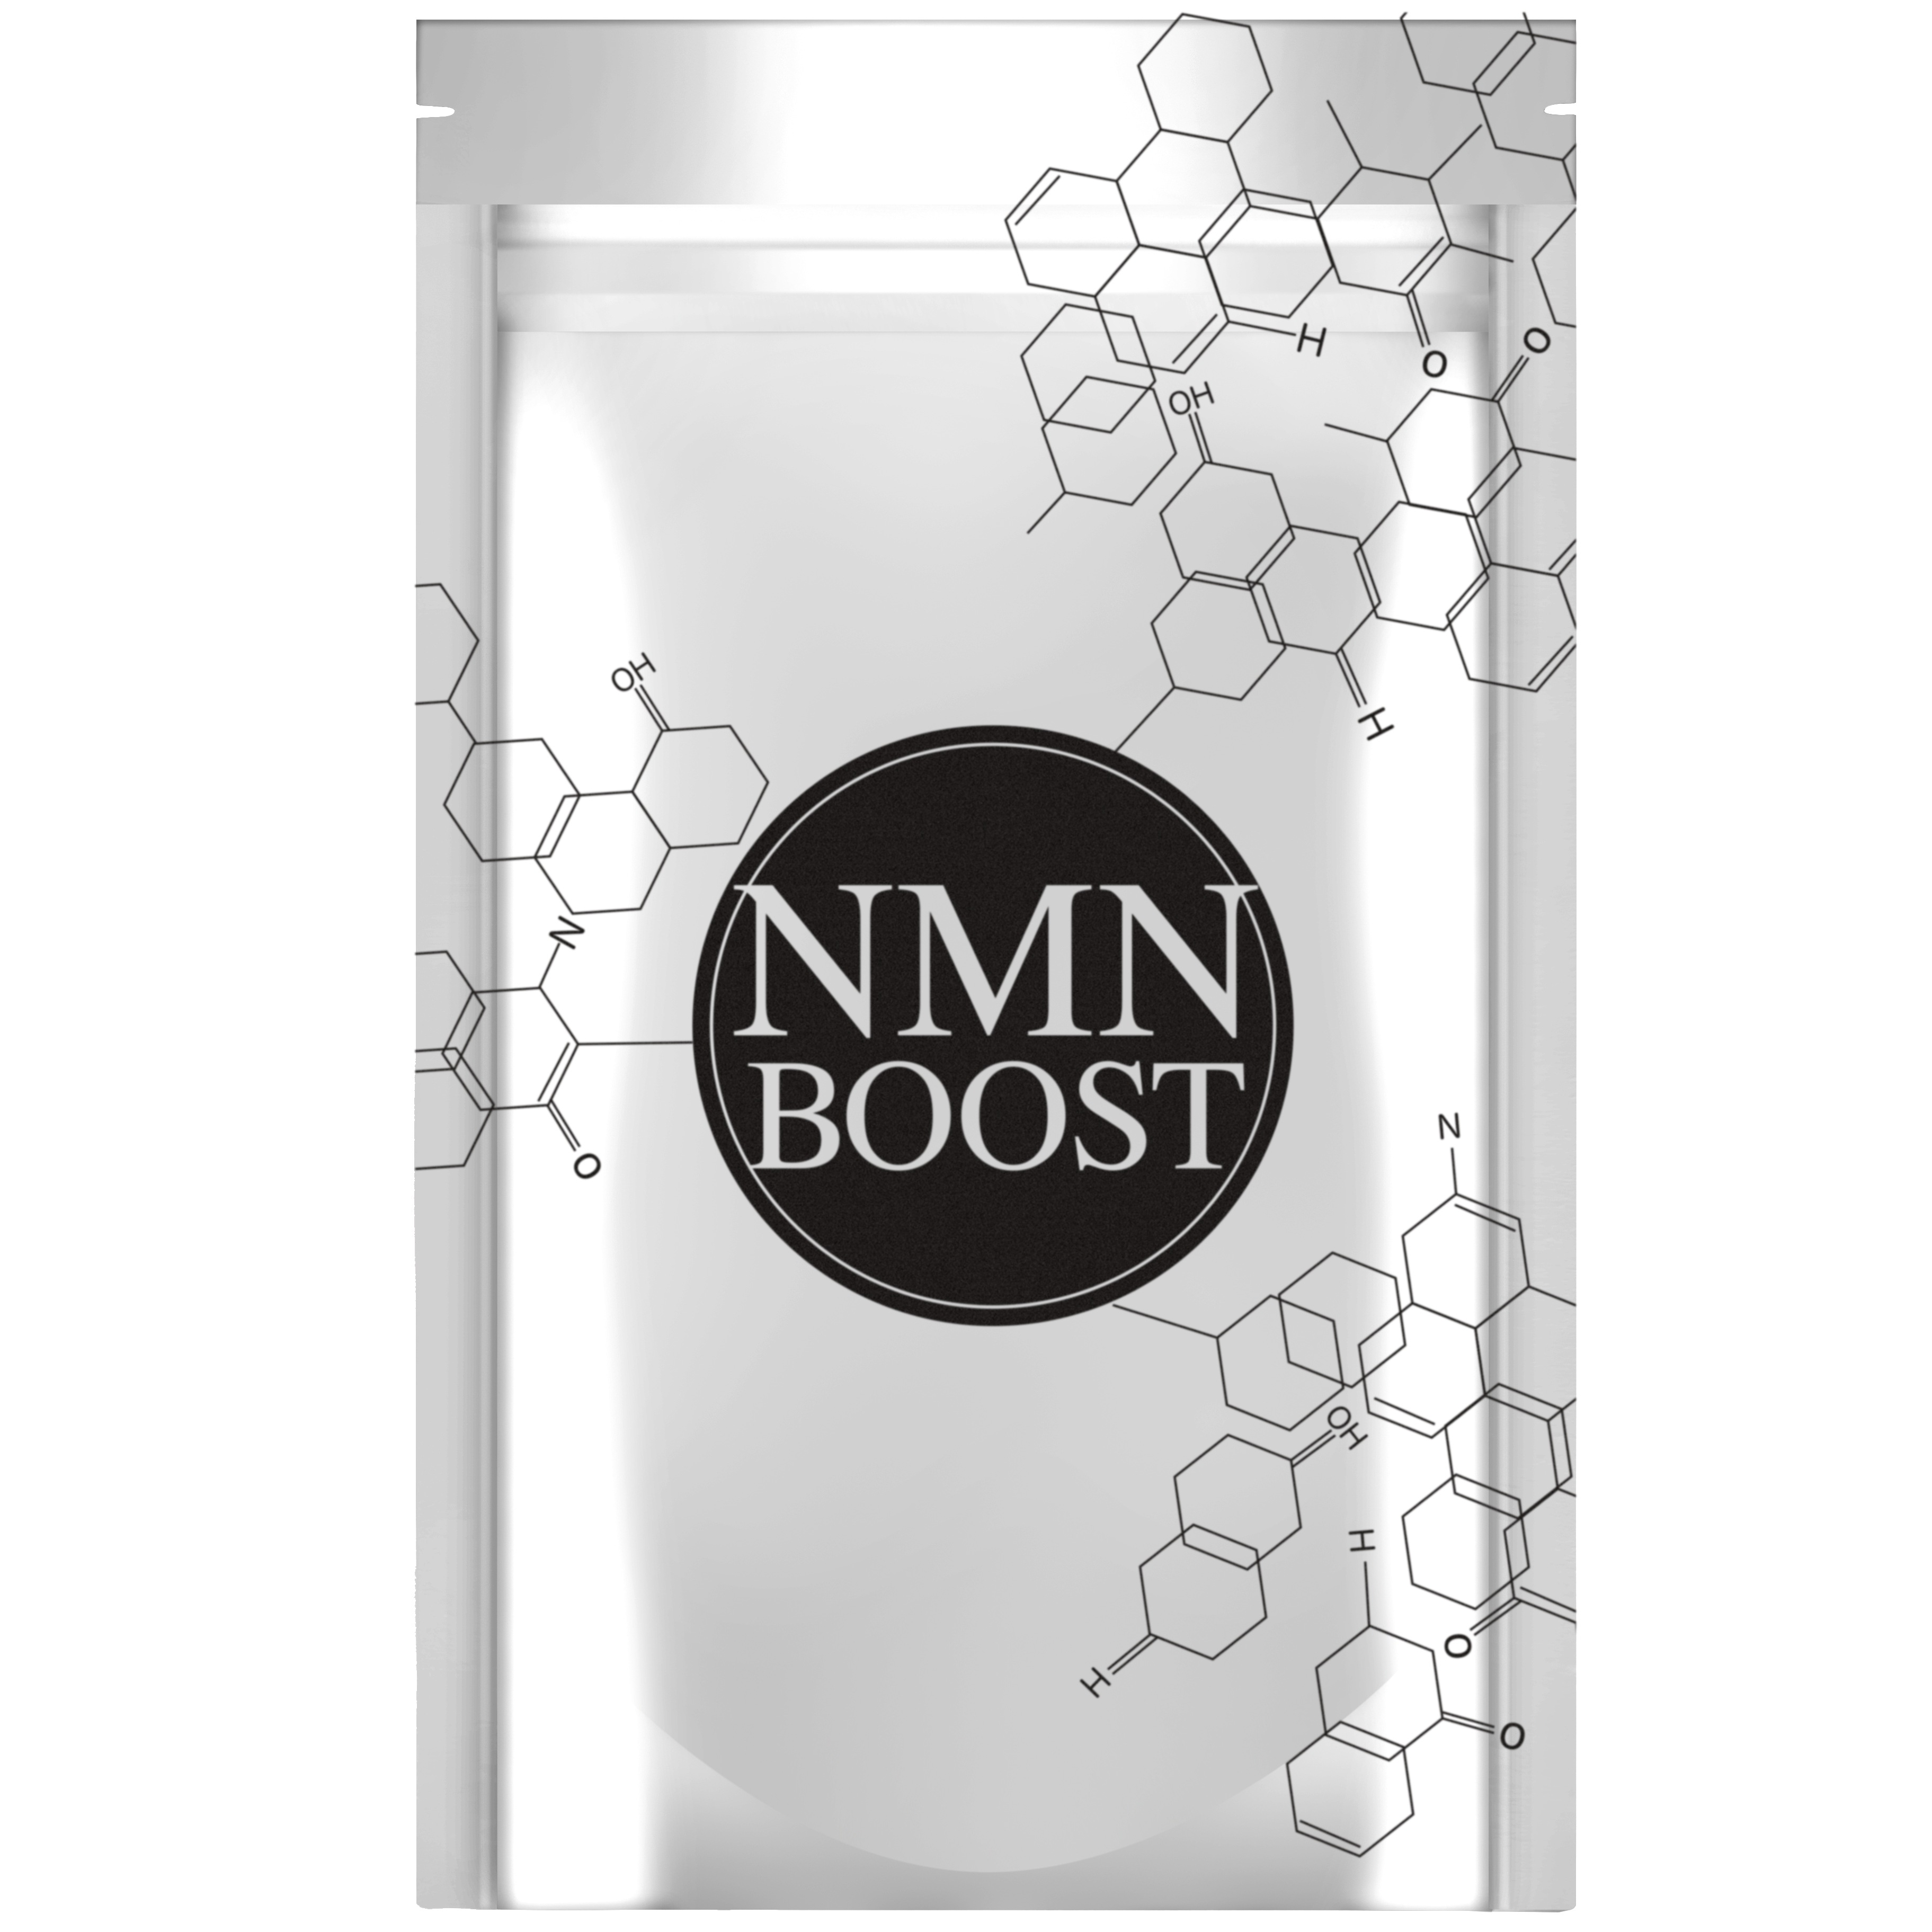 NMN BOOSTNMNBOOST 高配合 医師監修 NMN配合 日本産 サプリメント 30粒 4個セット